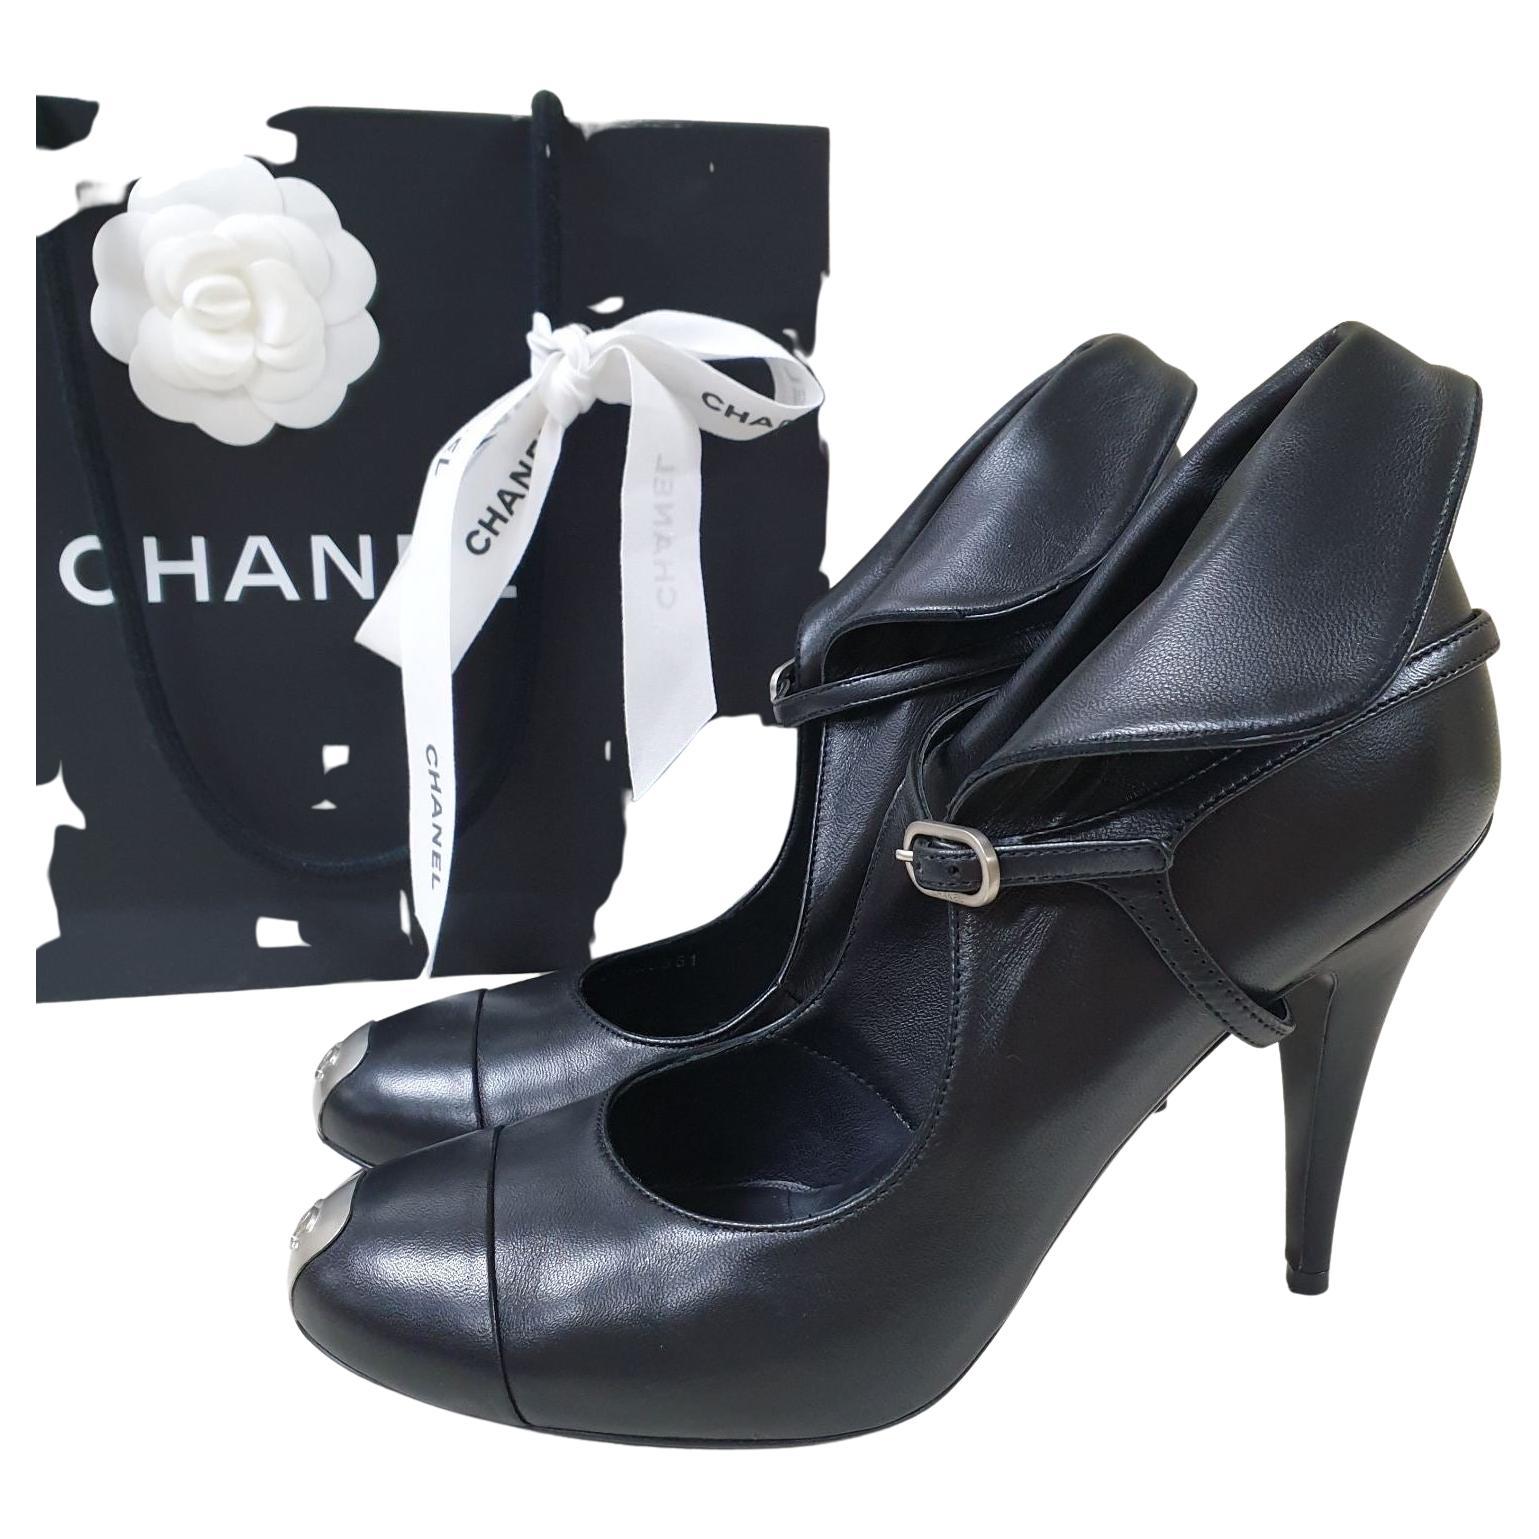 Chanel Logo Sandals - 48 For Sale on 1stDibs